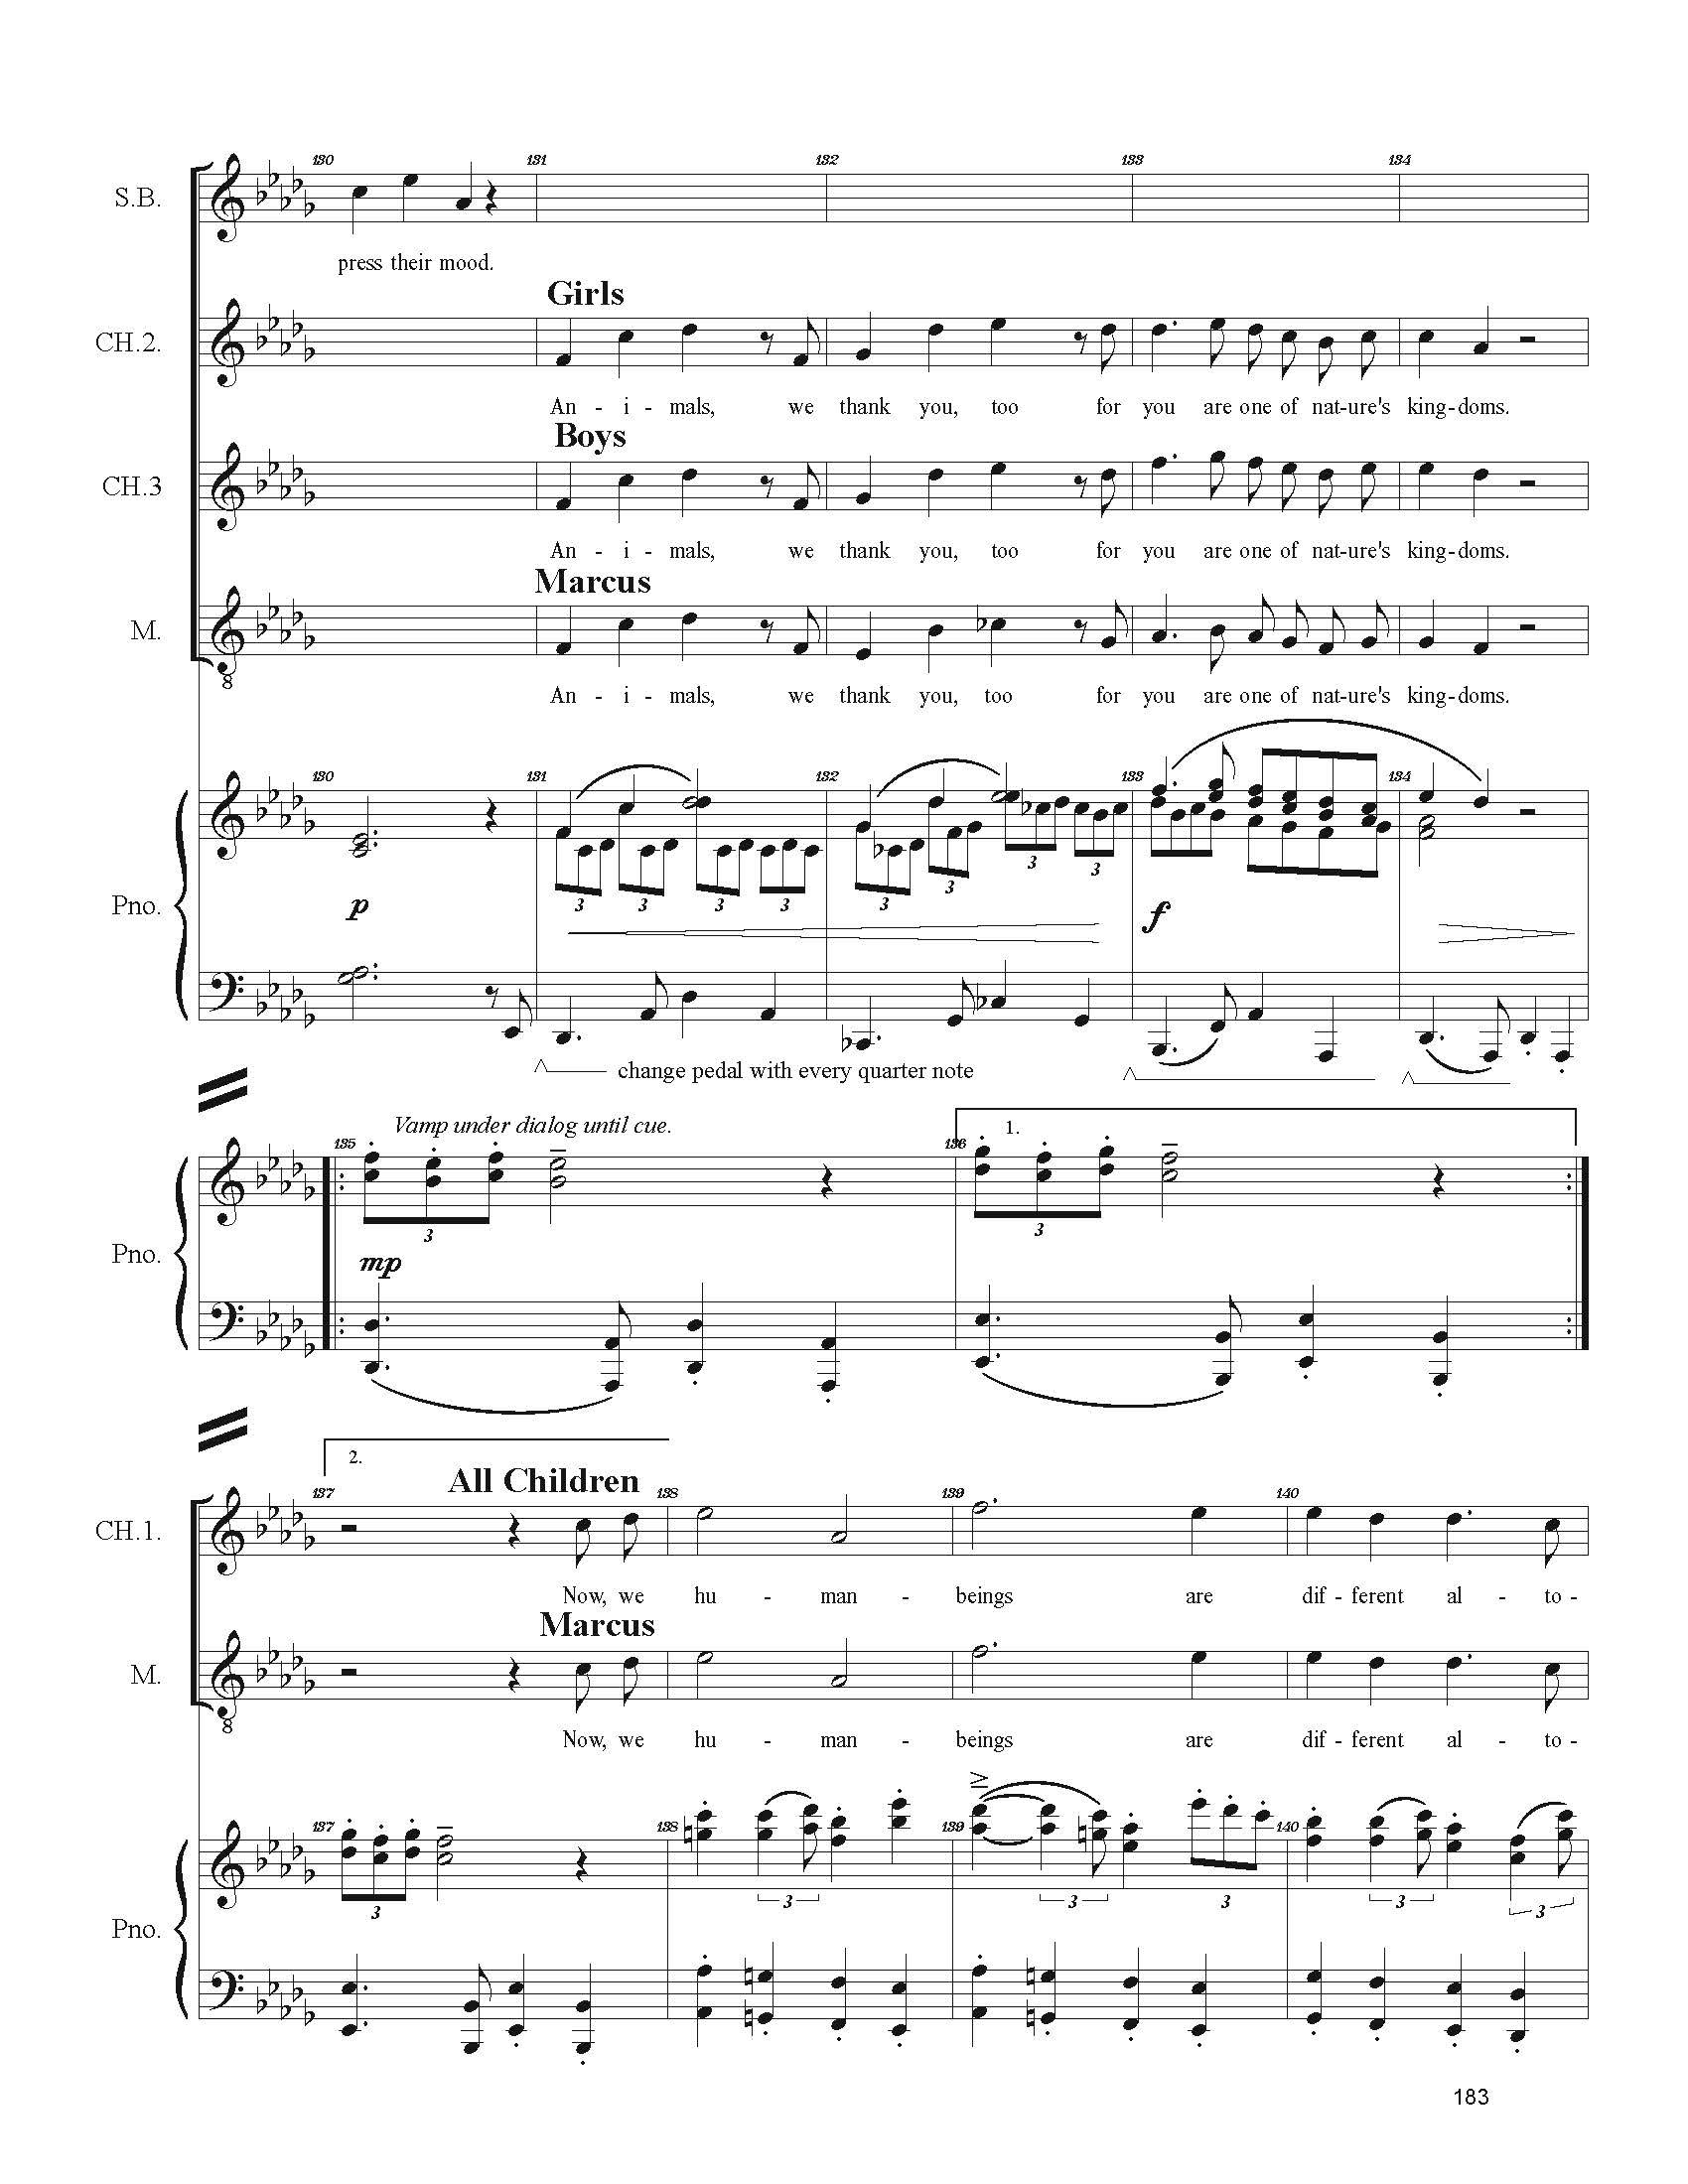 FULL PIANO VOCAL SCORE DRAFT 1 - Score_Page_183.jpg